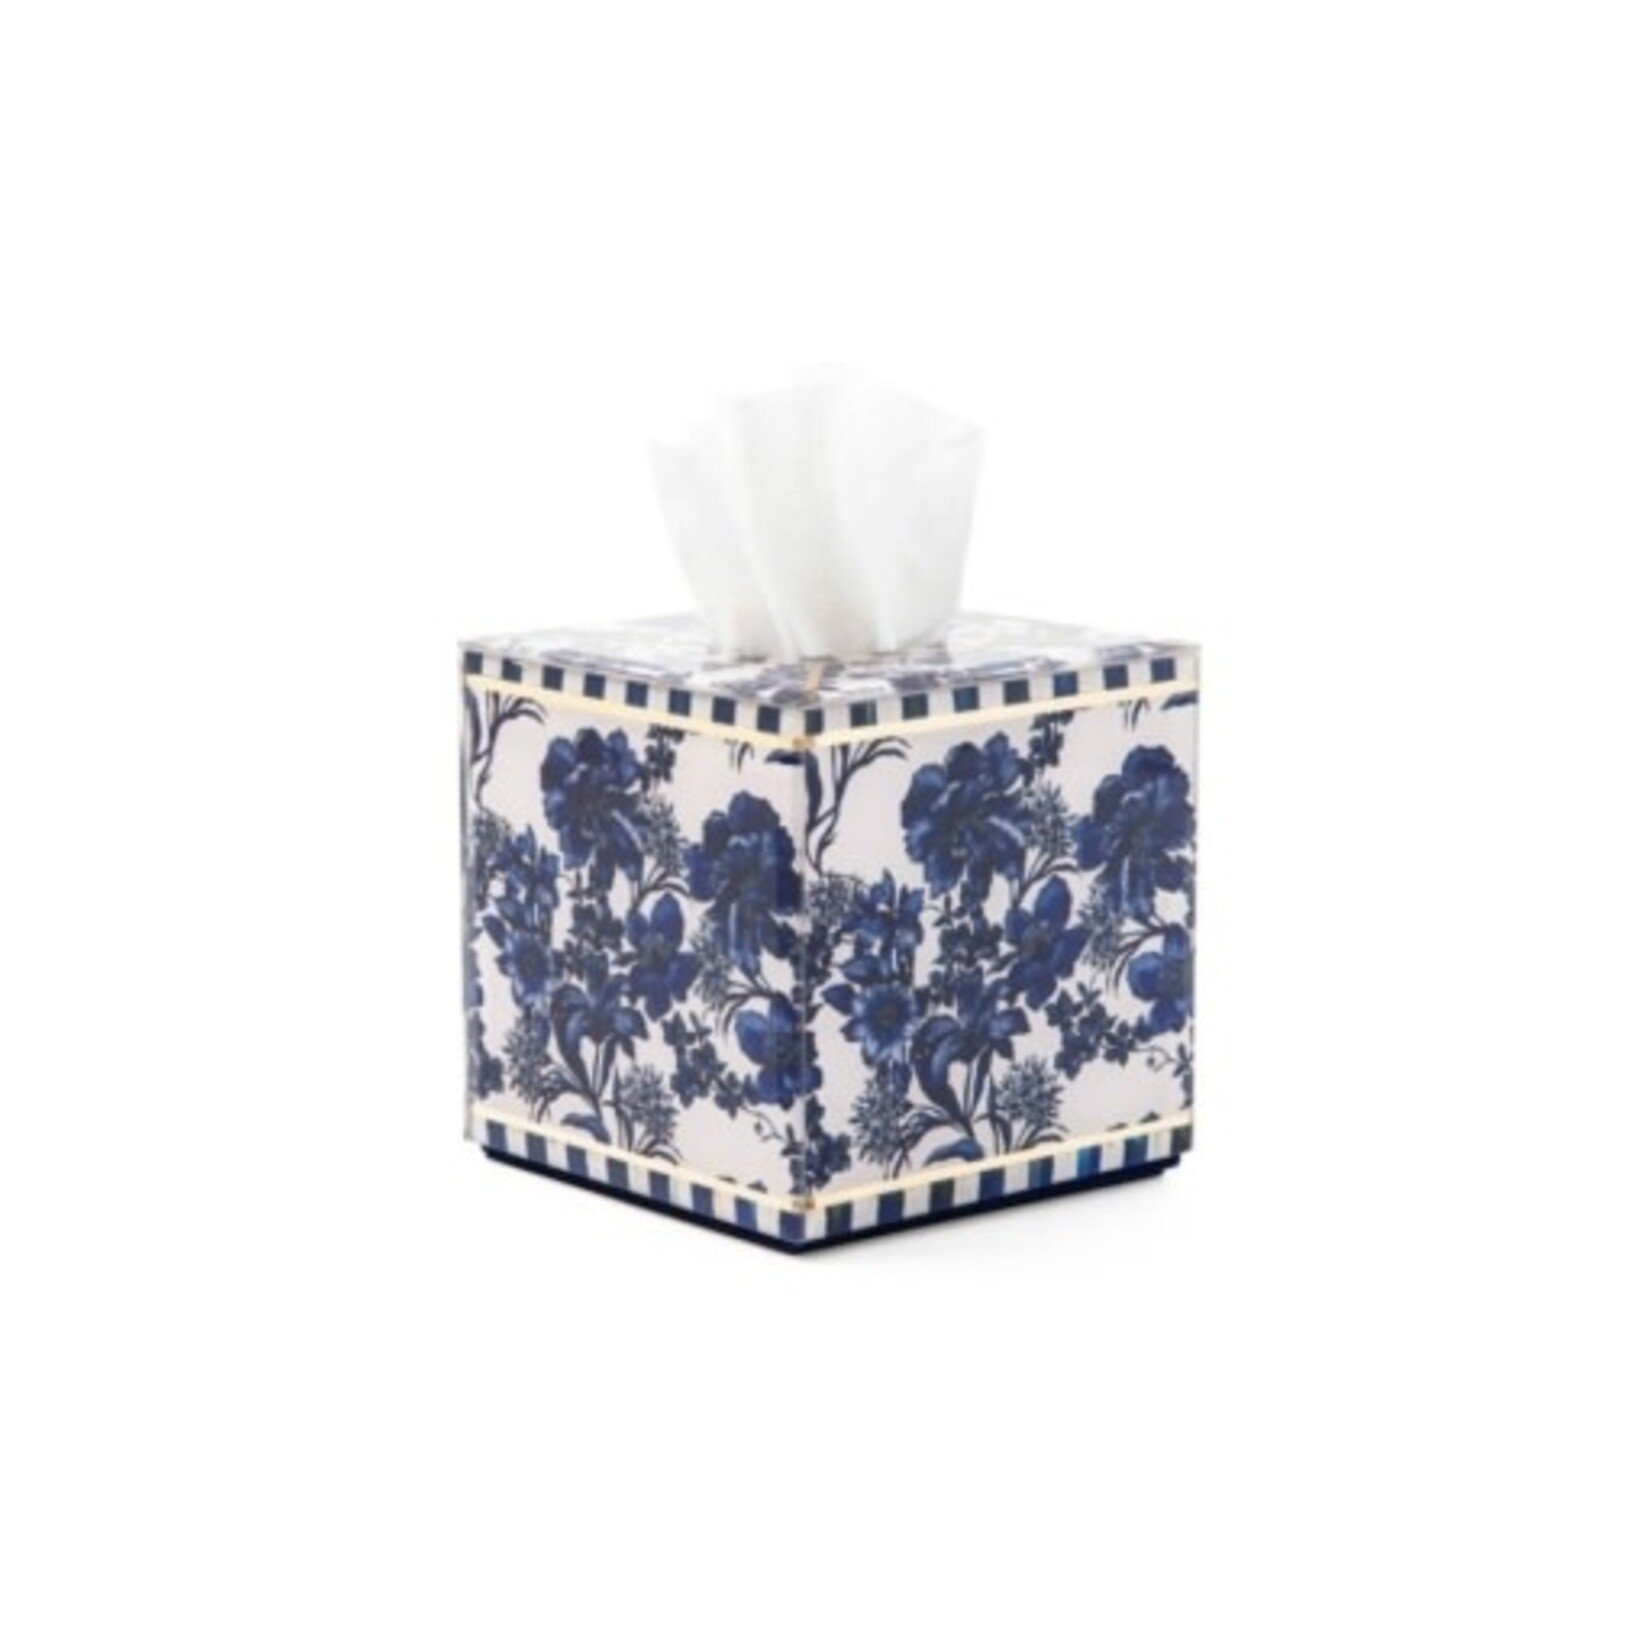 MacKenzie-Childs royal english garden boutique tissue box cover